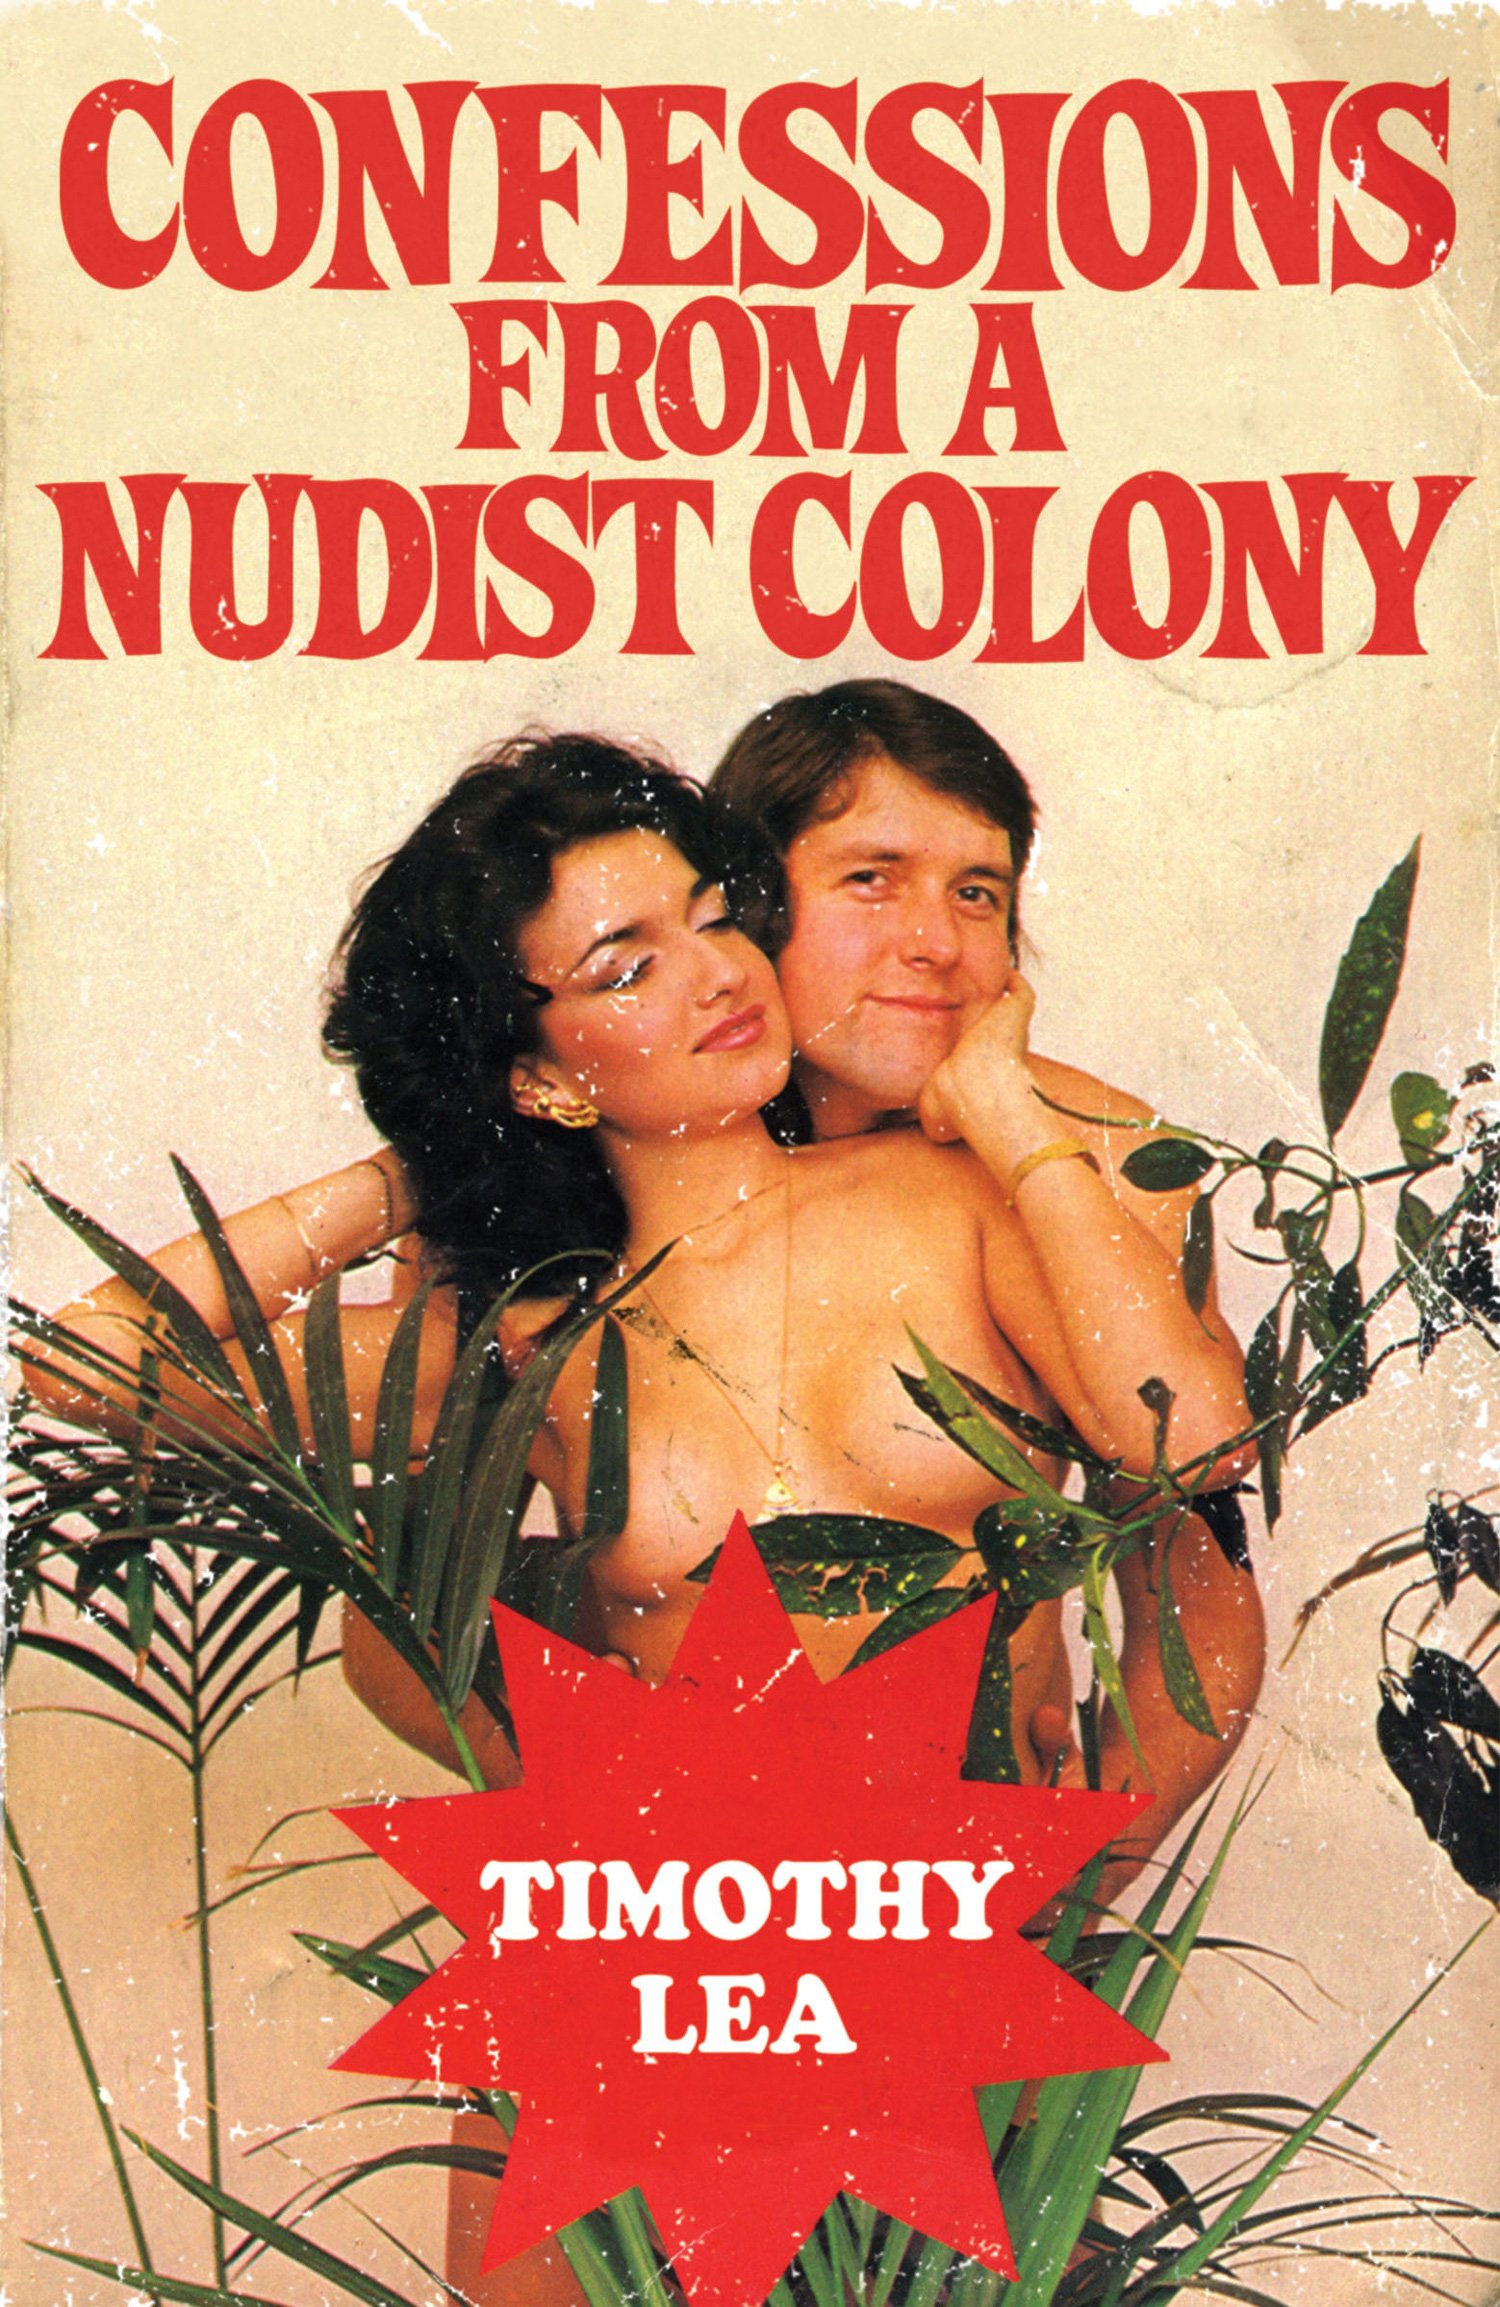 SS Nudist couples.